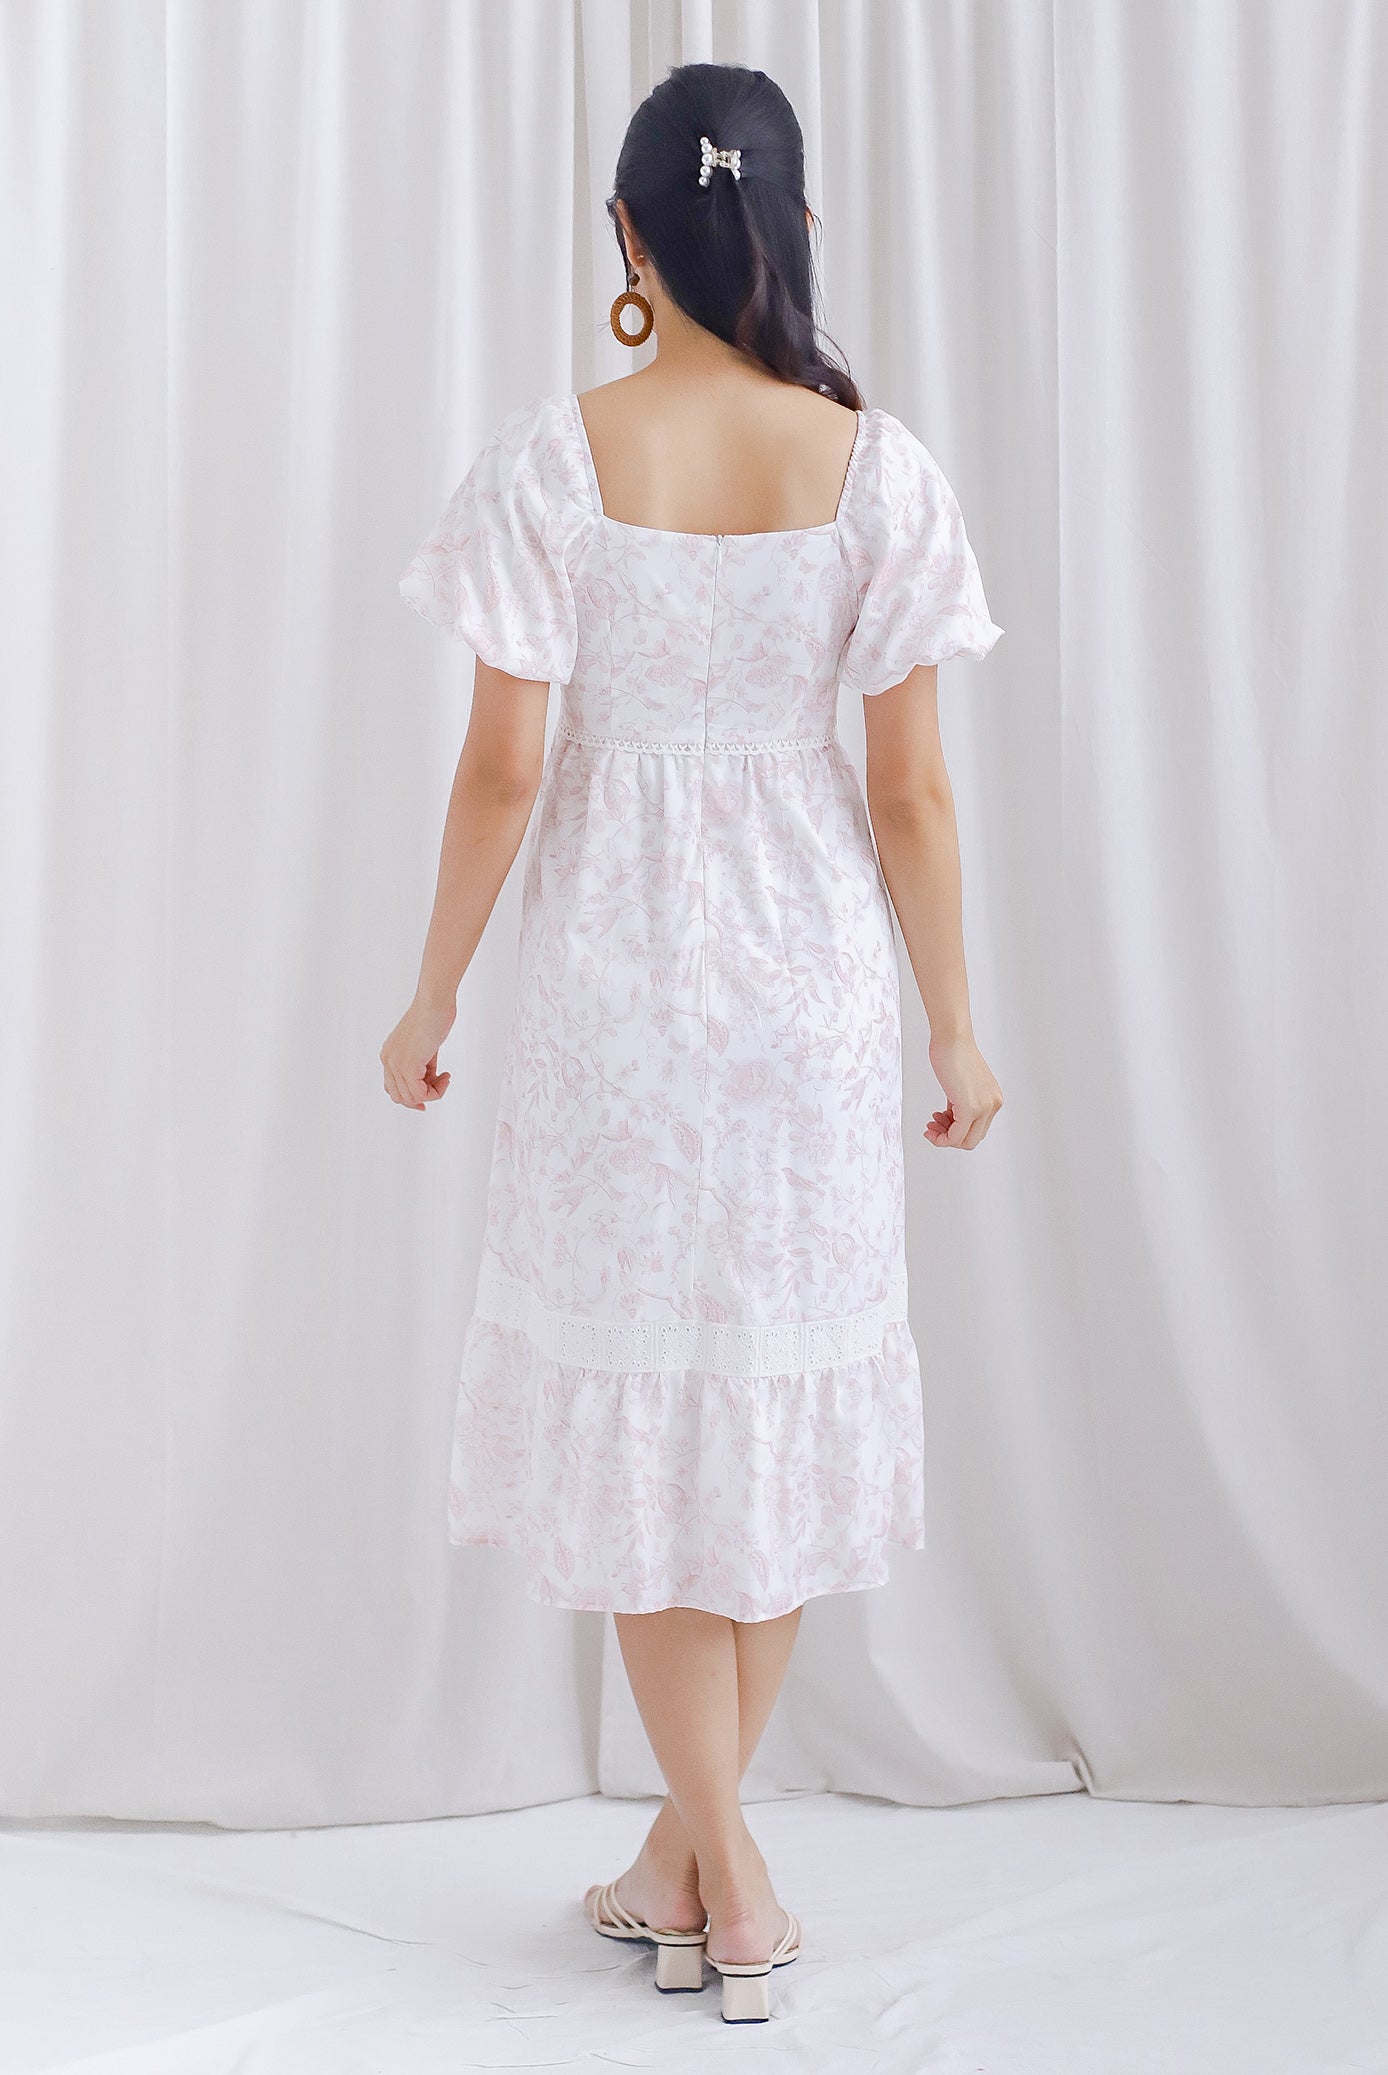 Laurice Porelain Lattice Insert Puffy Sleeve Midi Dress In White/Pink